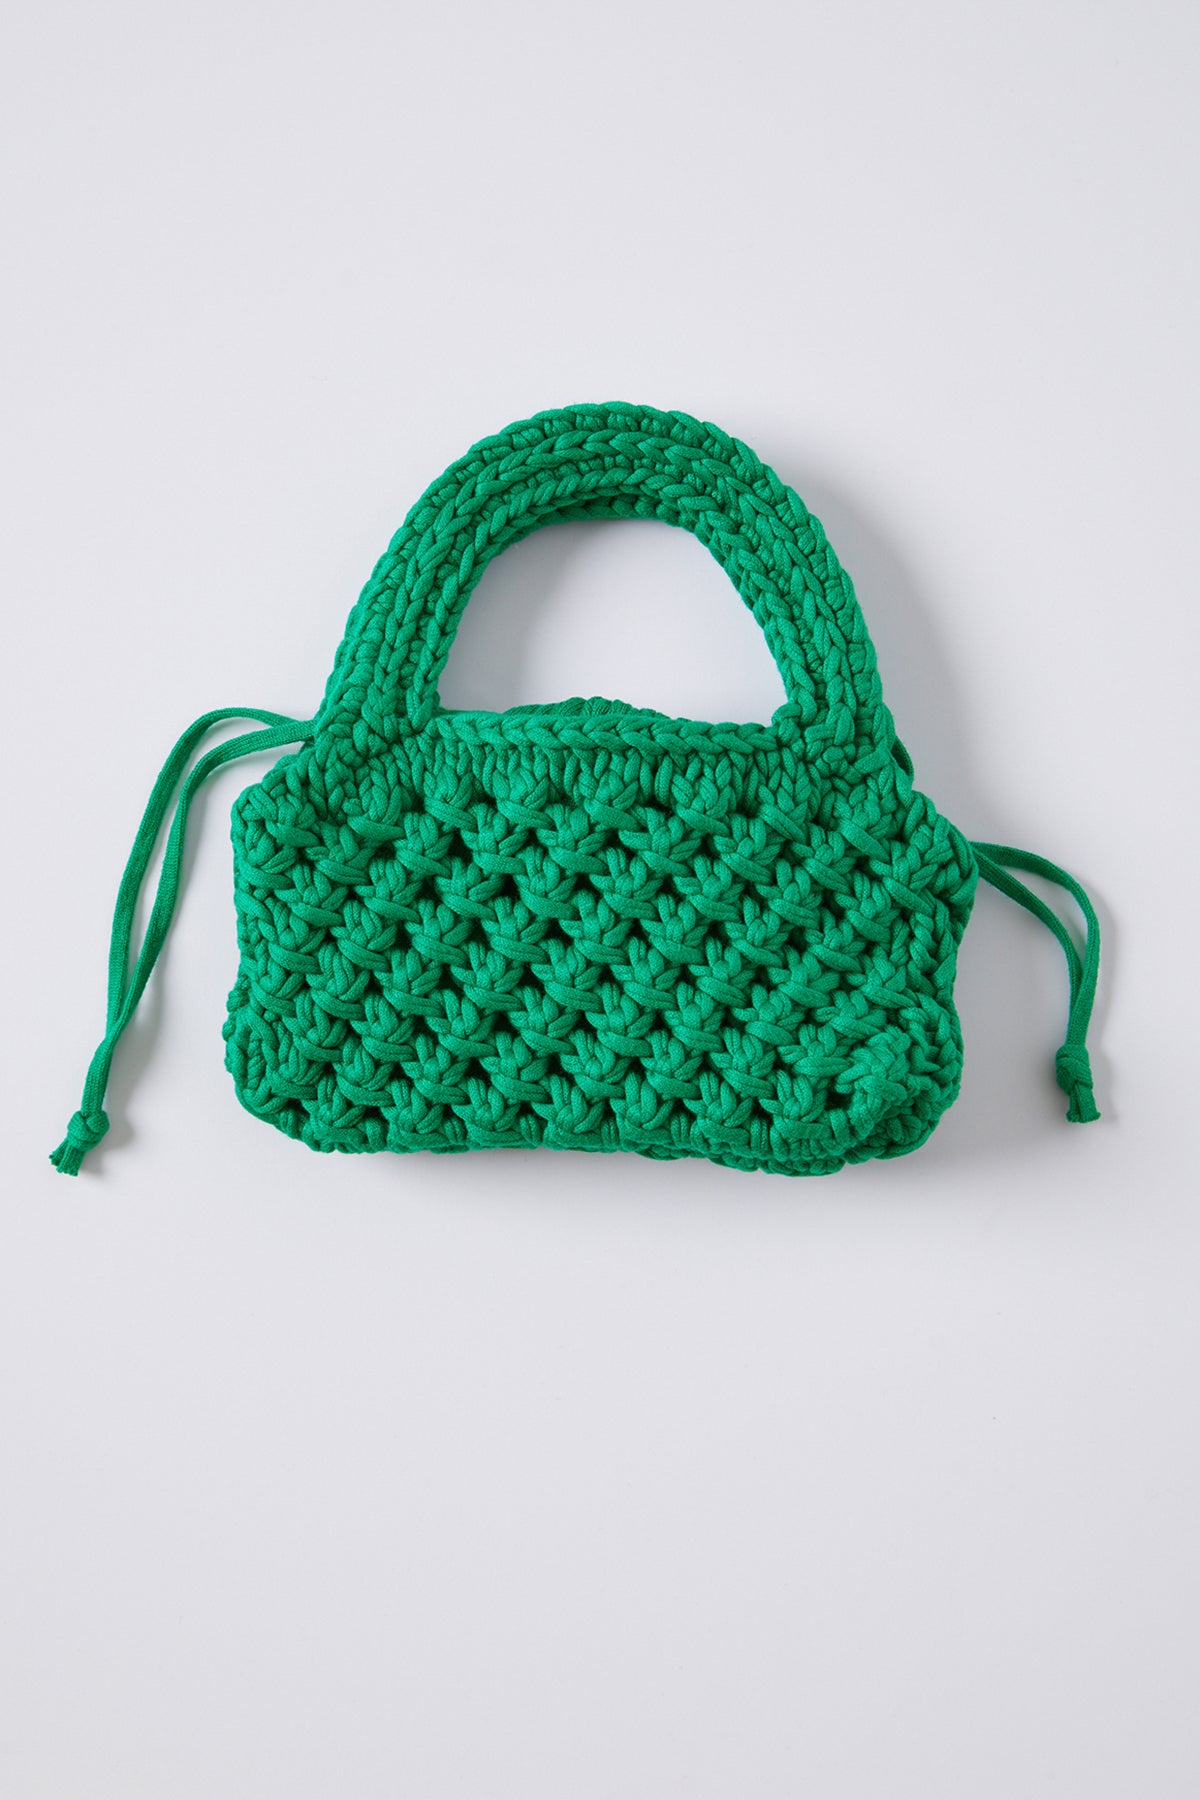   Bennie Crochet Bag in clover 